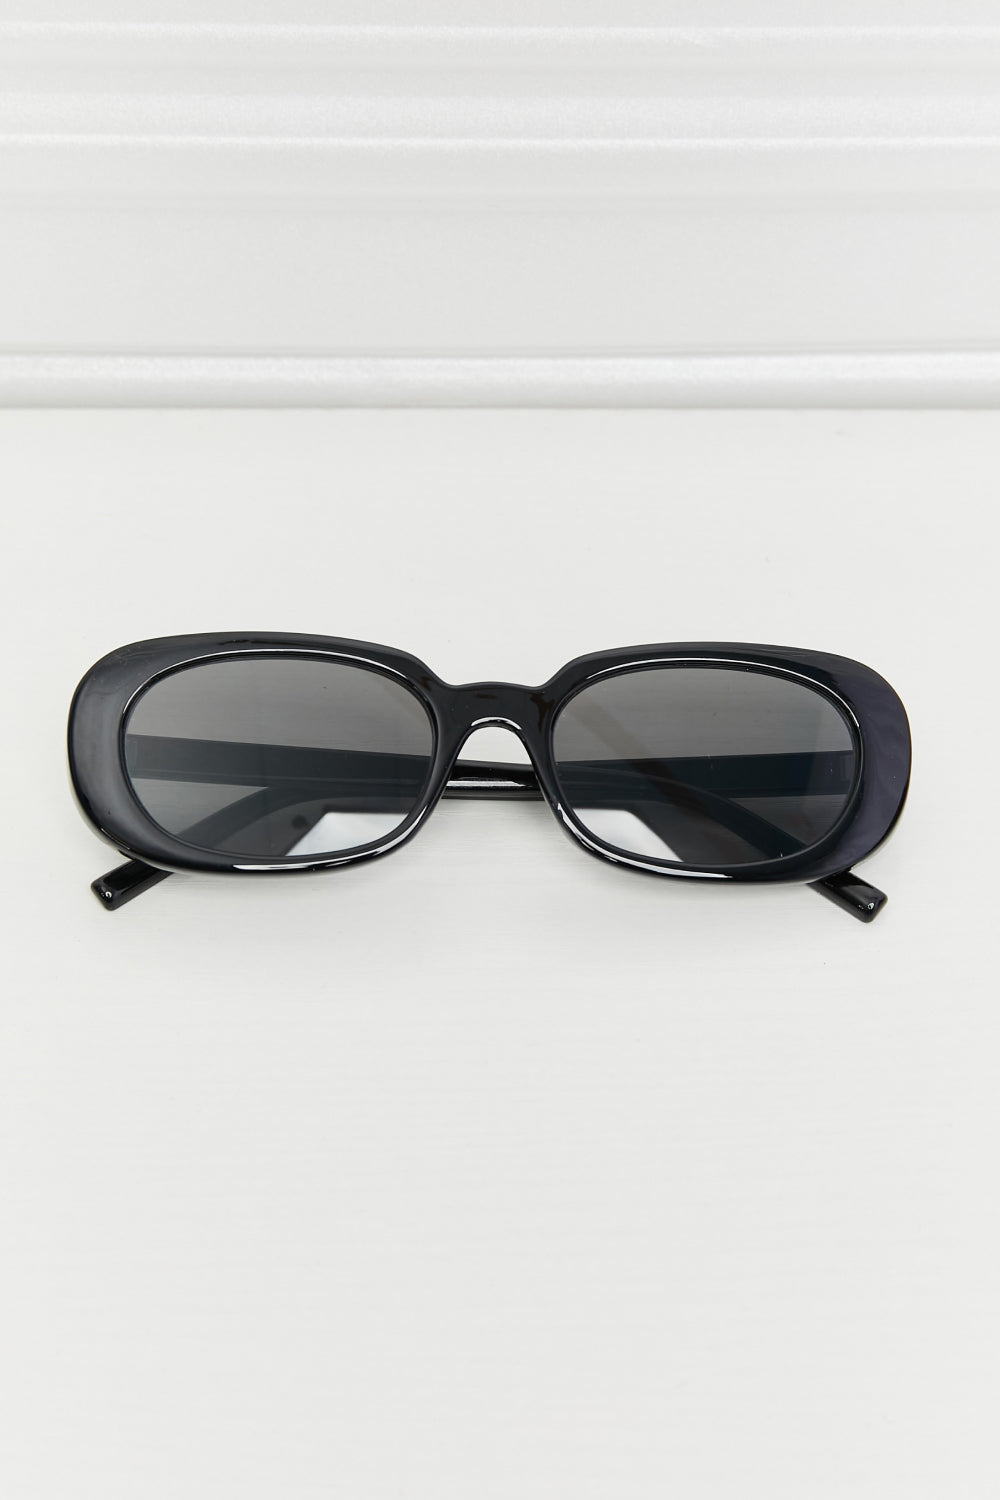 Oval Full Rim Sunglasses One Size Sunglasses by Vim&Vigor | Vim&Vigor Boutique